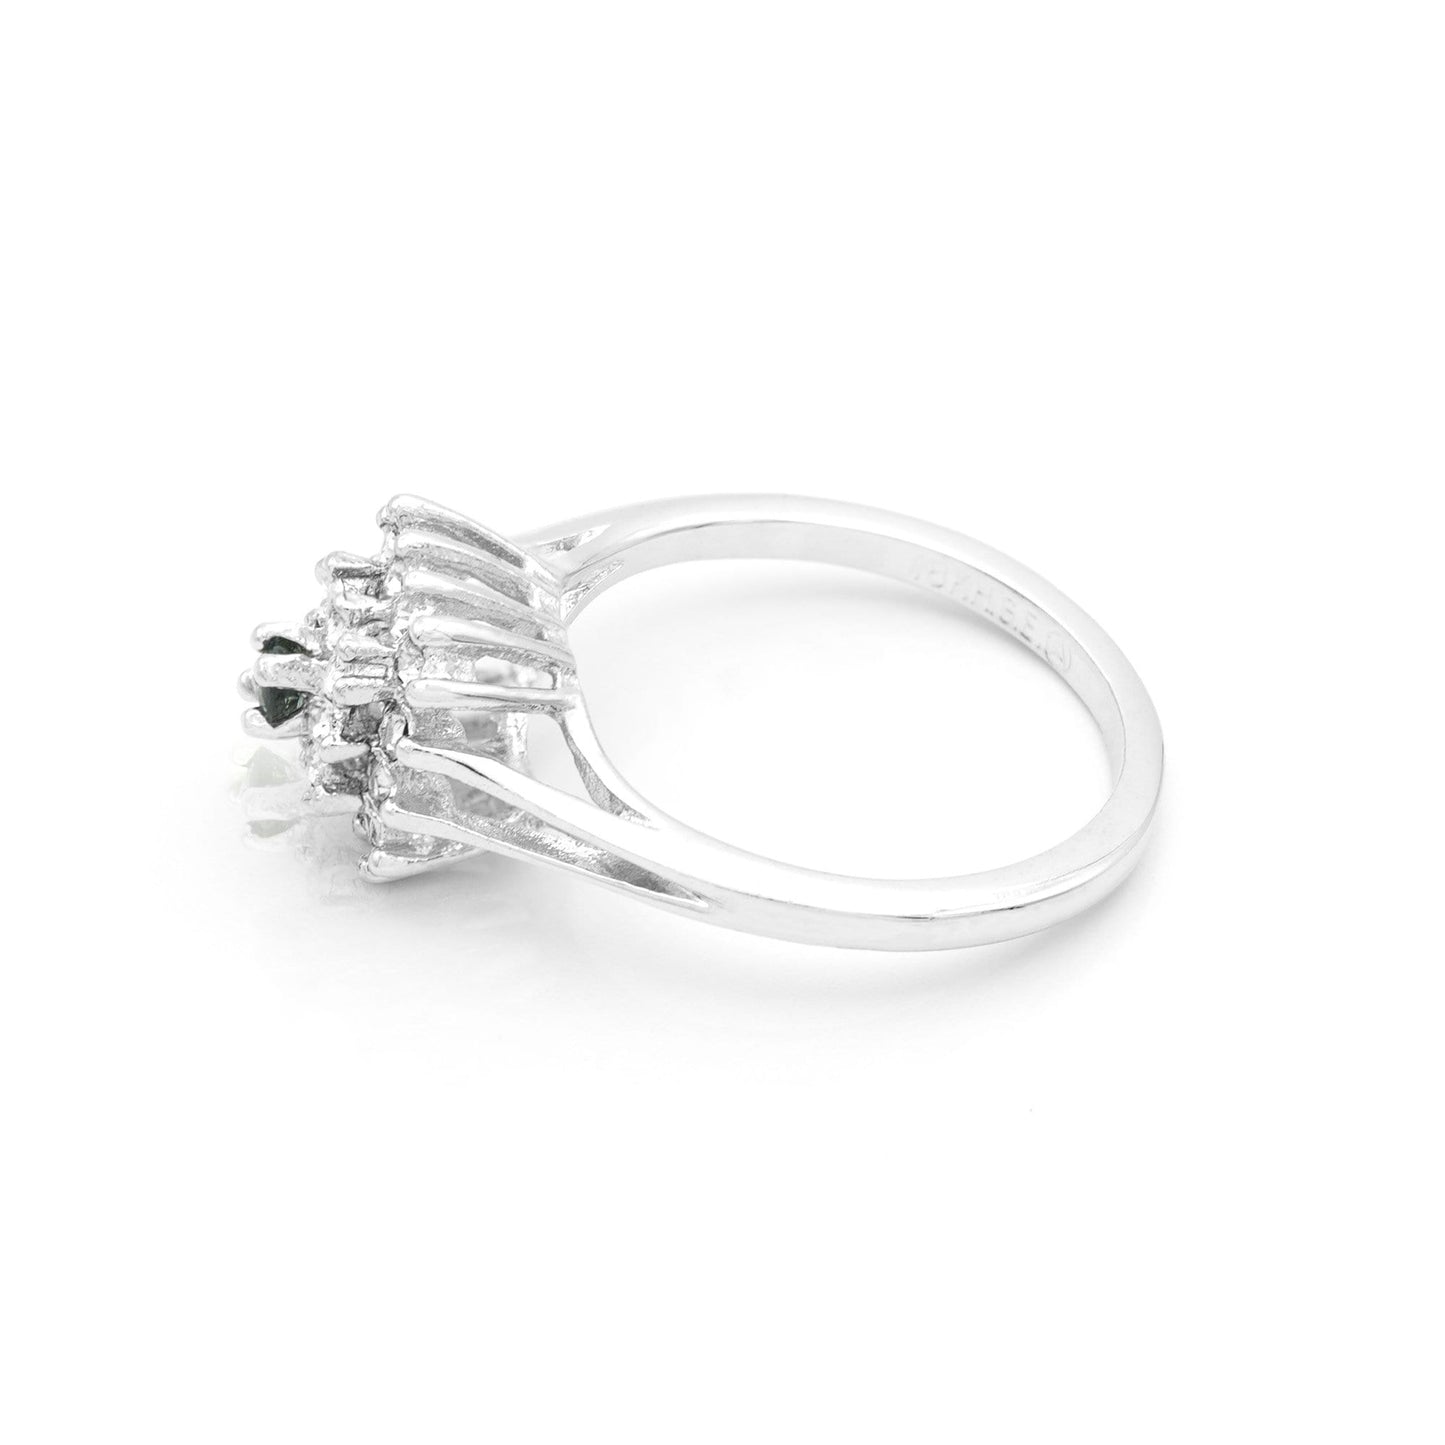 Vintage Ring Genuine Sapphire Burst Ring 18k White Gold Silver  R885 - Limited Stock - Never Worn